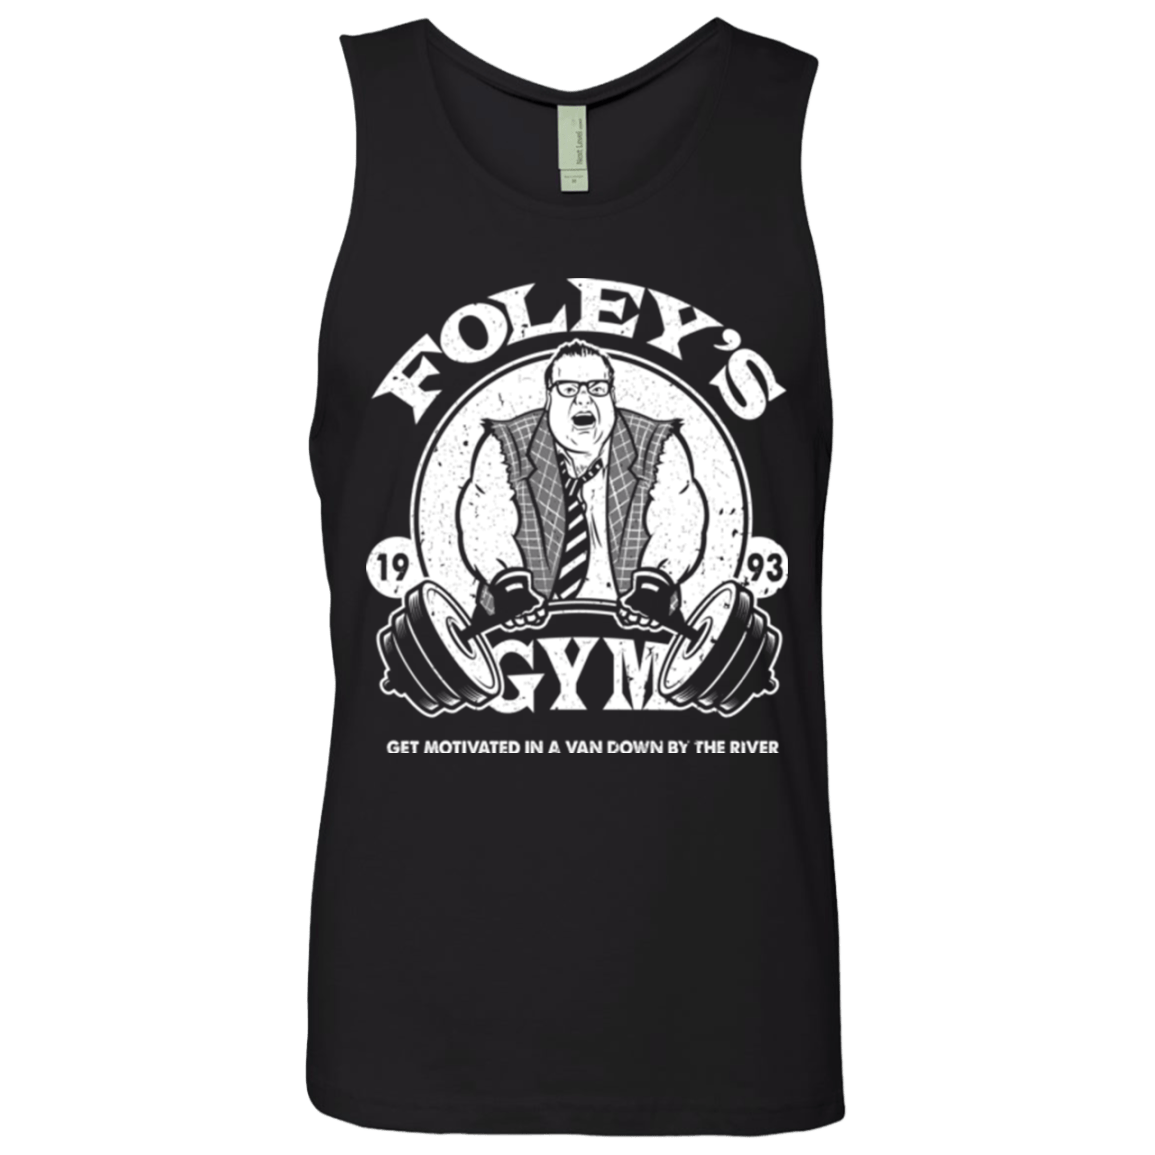 T-Shirts Black / Small Foleys Gym Men's Premium Tank Top